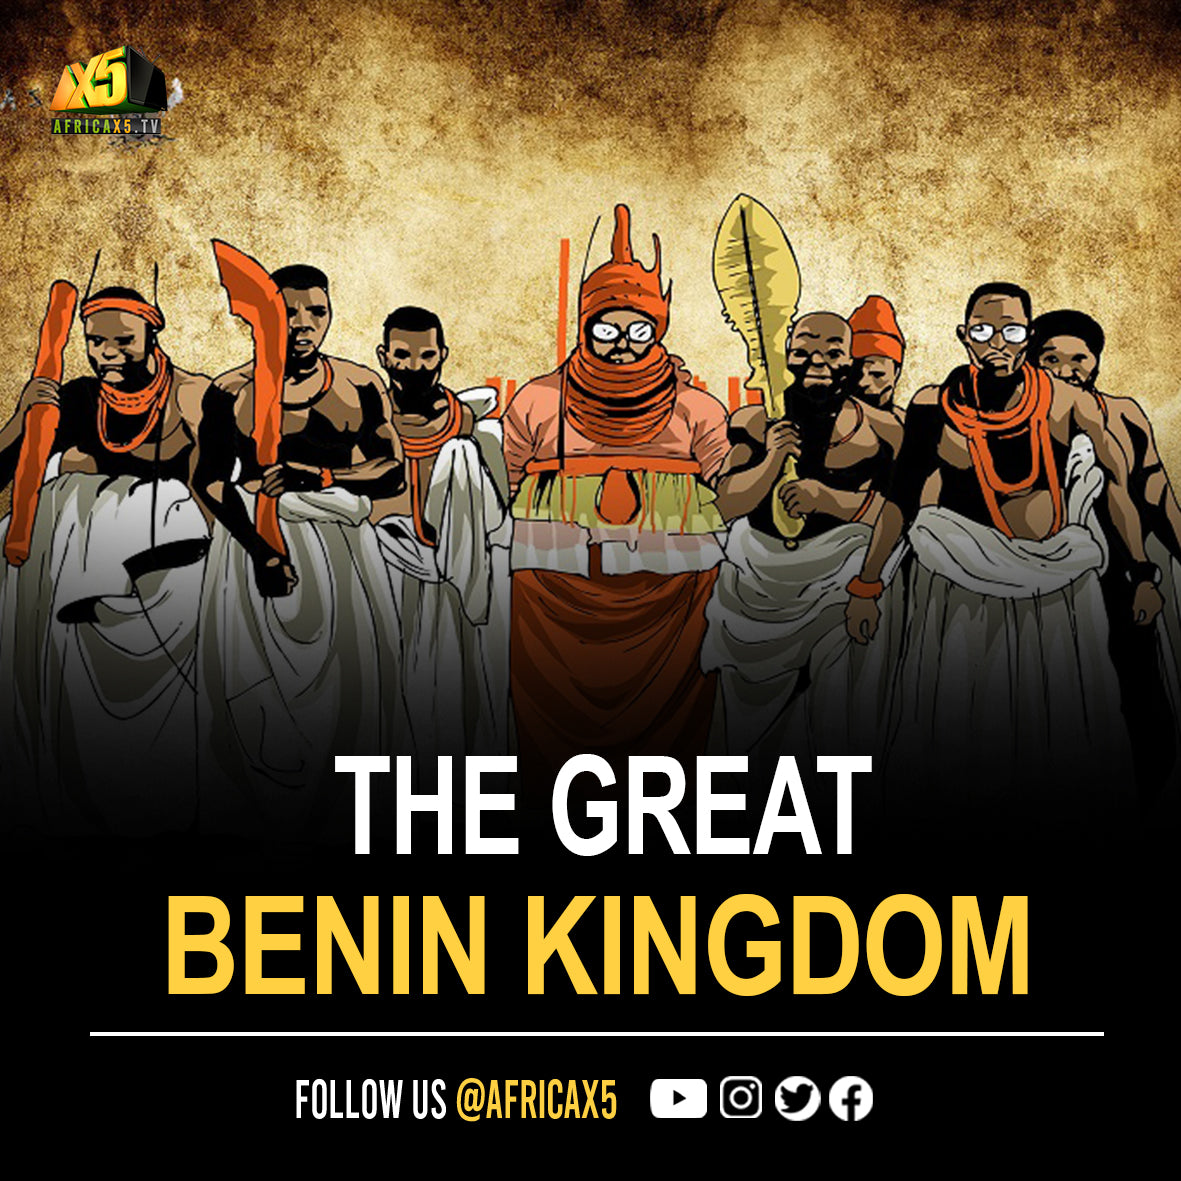 The Great Benin Kingdom